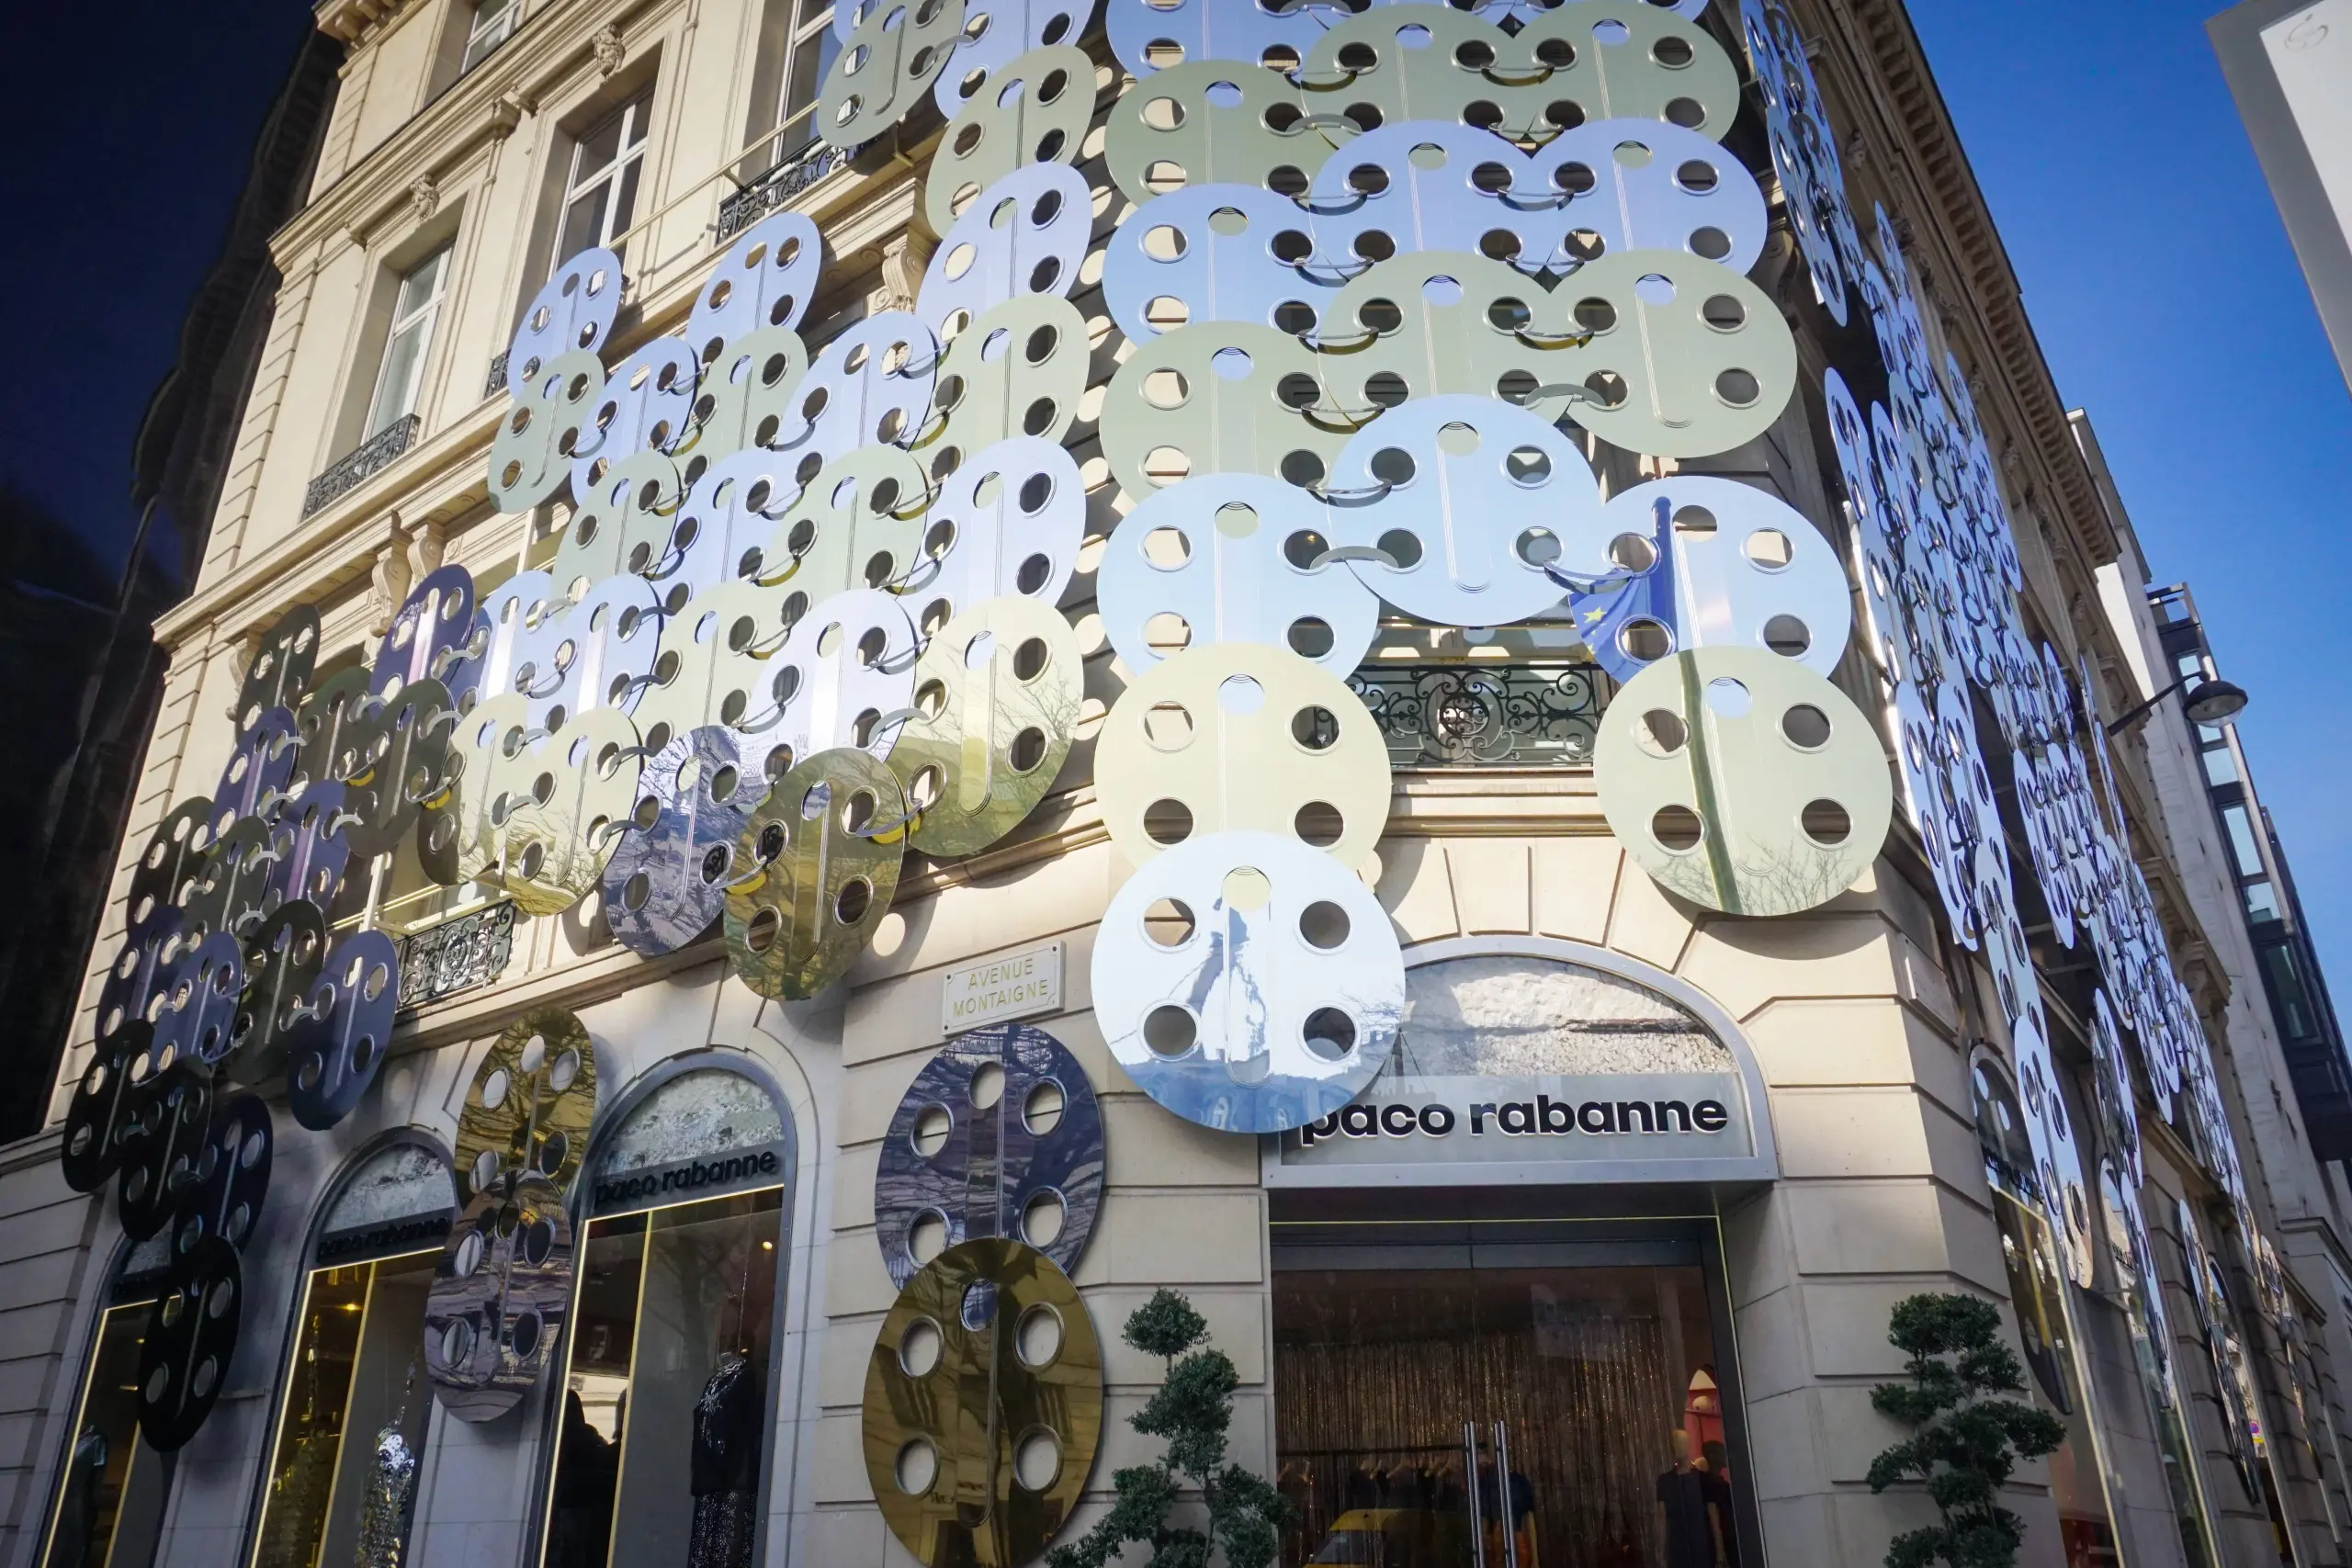 Paco Rabanne Store in Paris